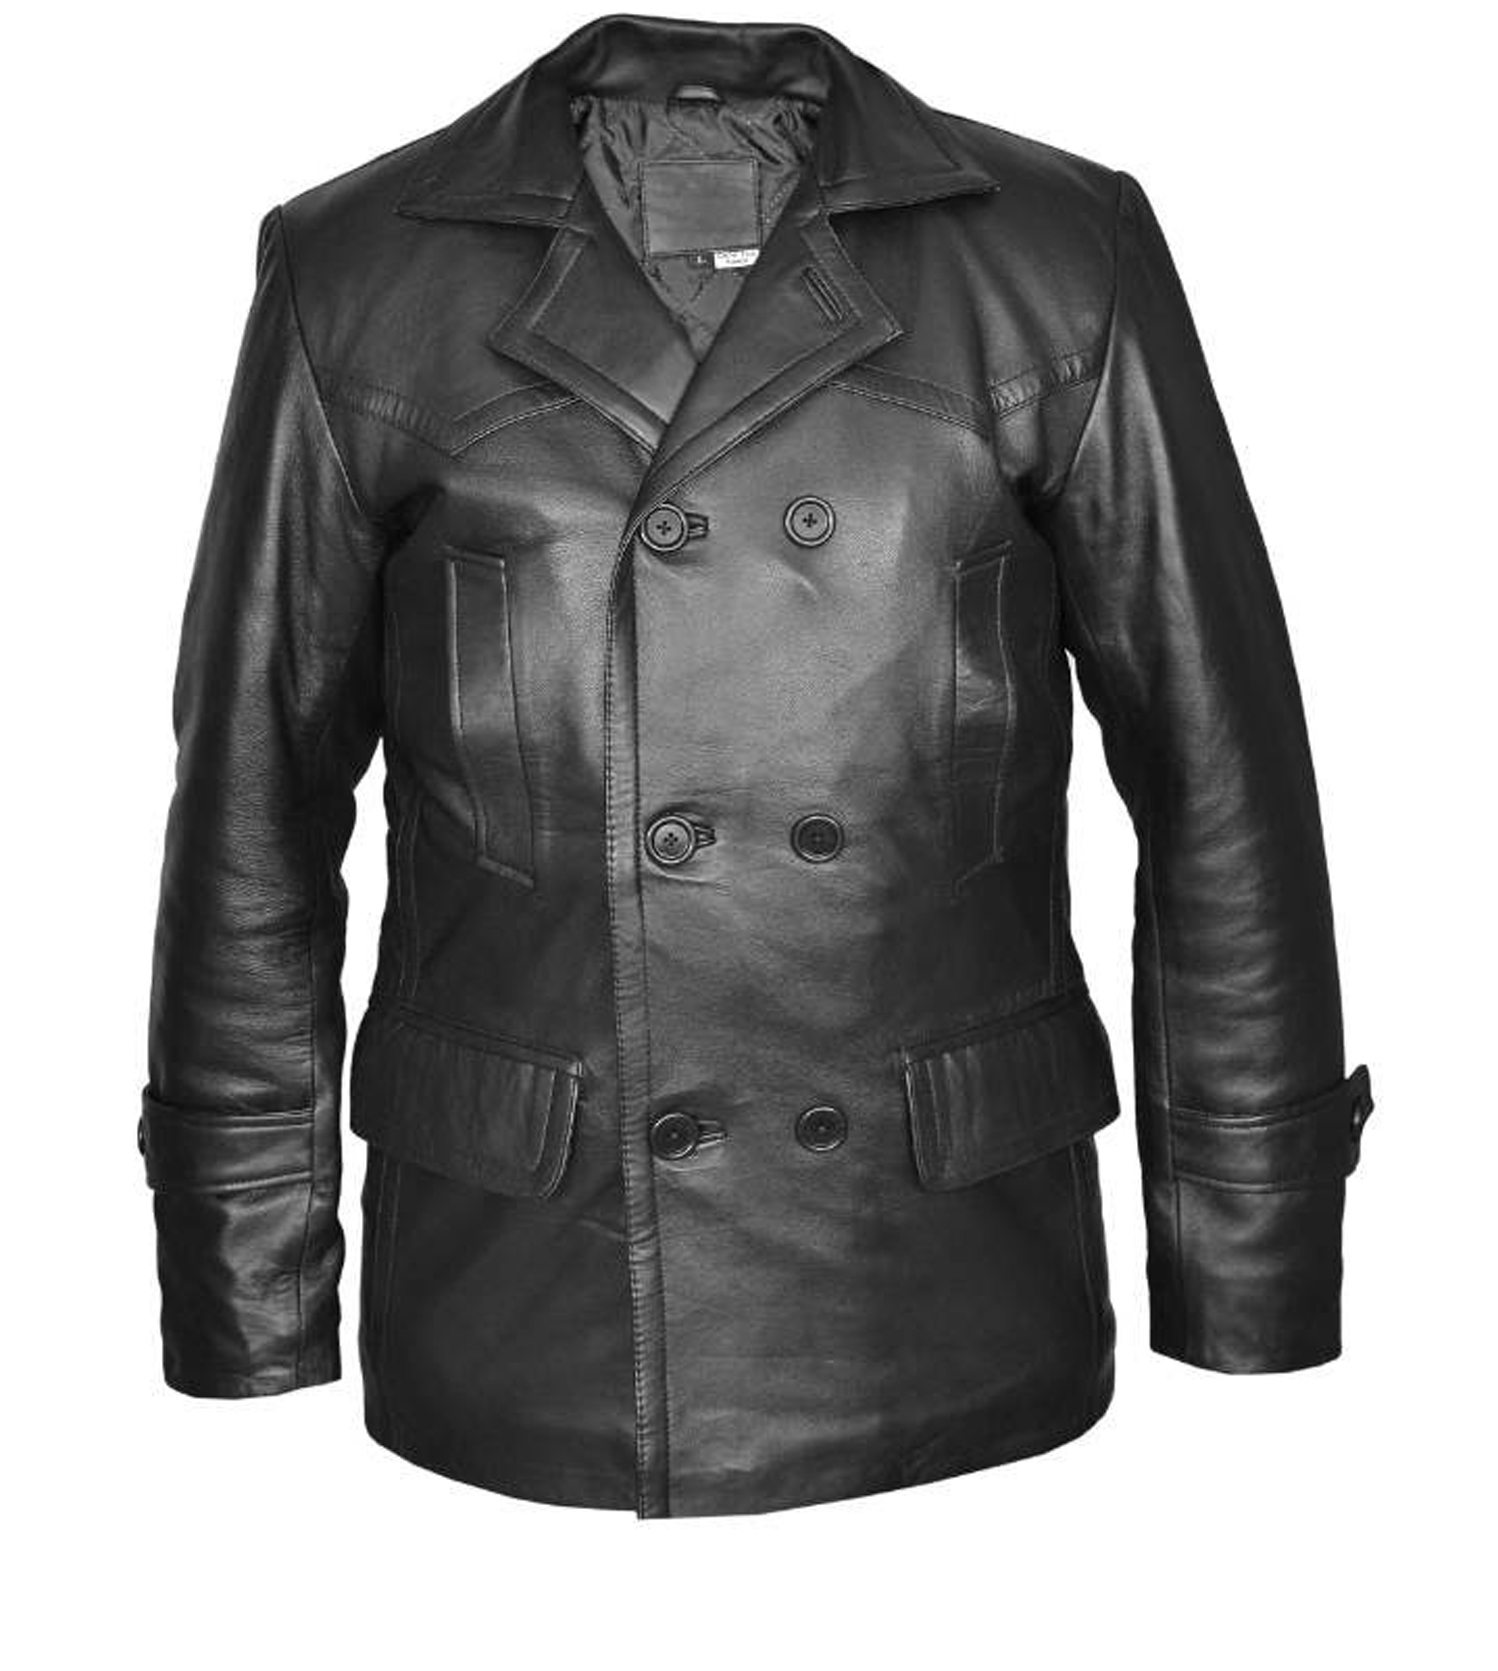 Dr Who Men's Leather Jacket Online | German Navy Pea Coat